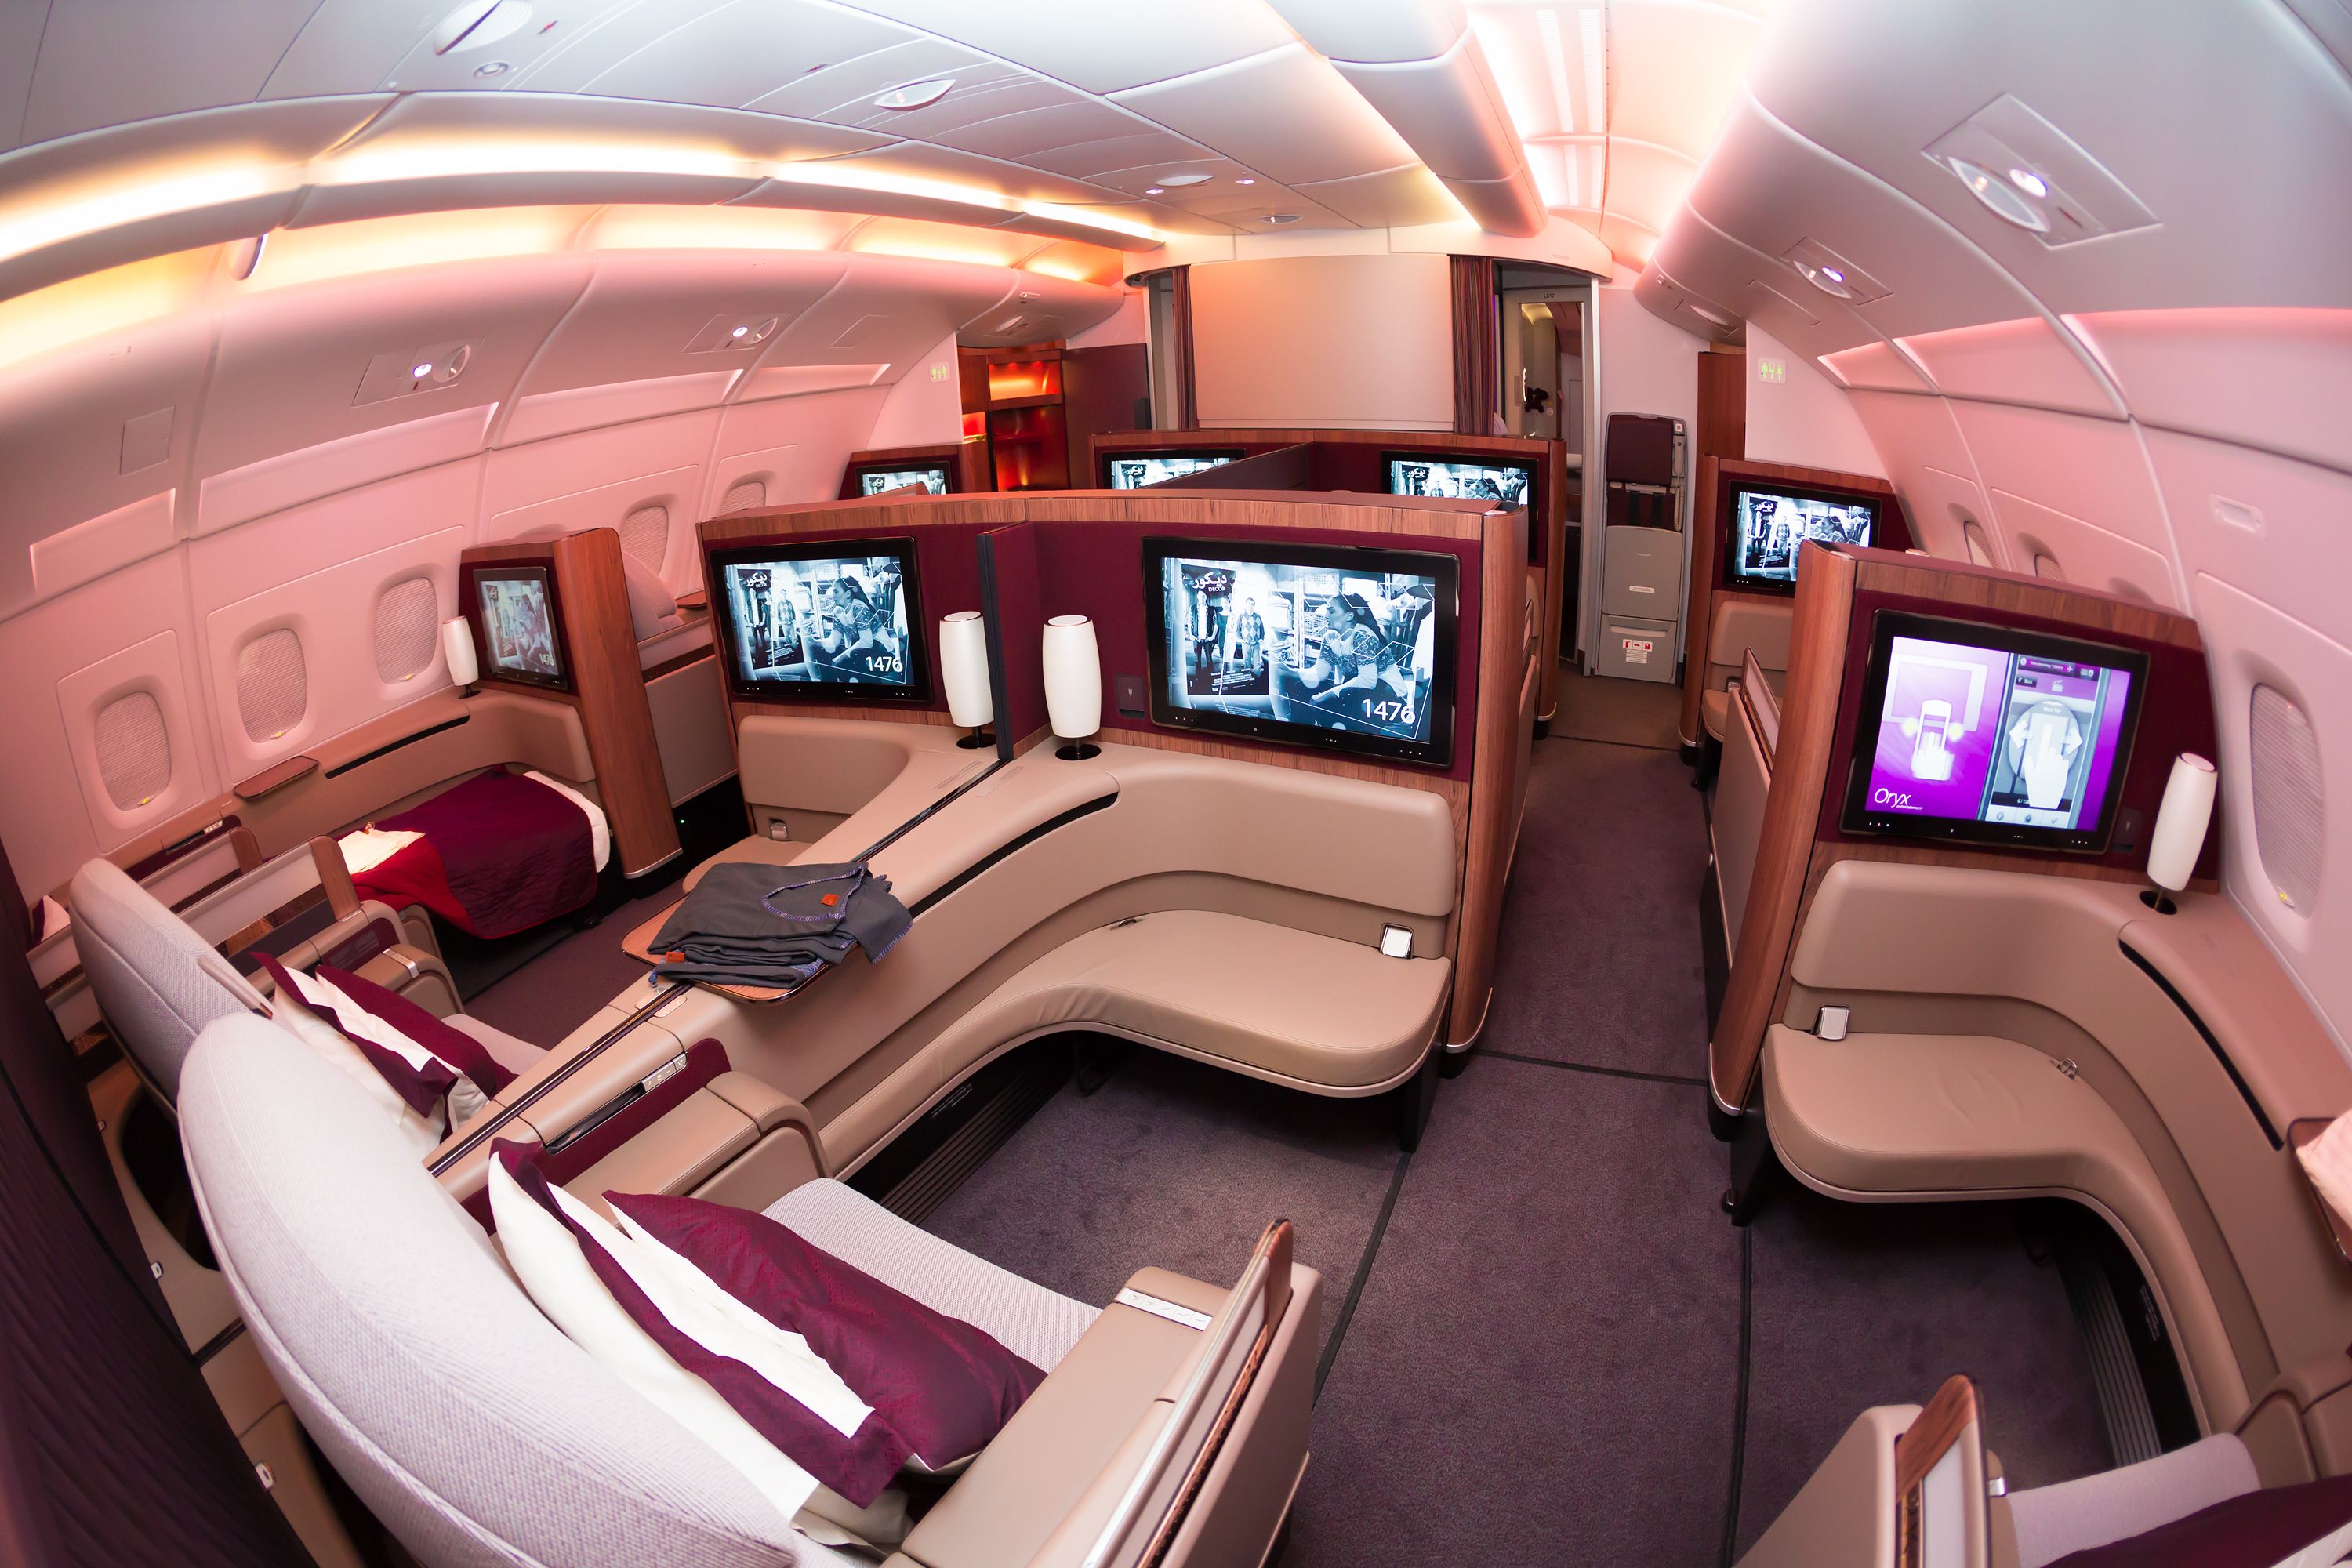 Inside Qatar Airways First Class Cabin.